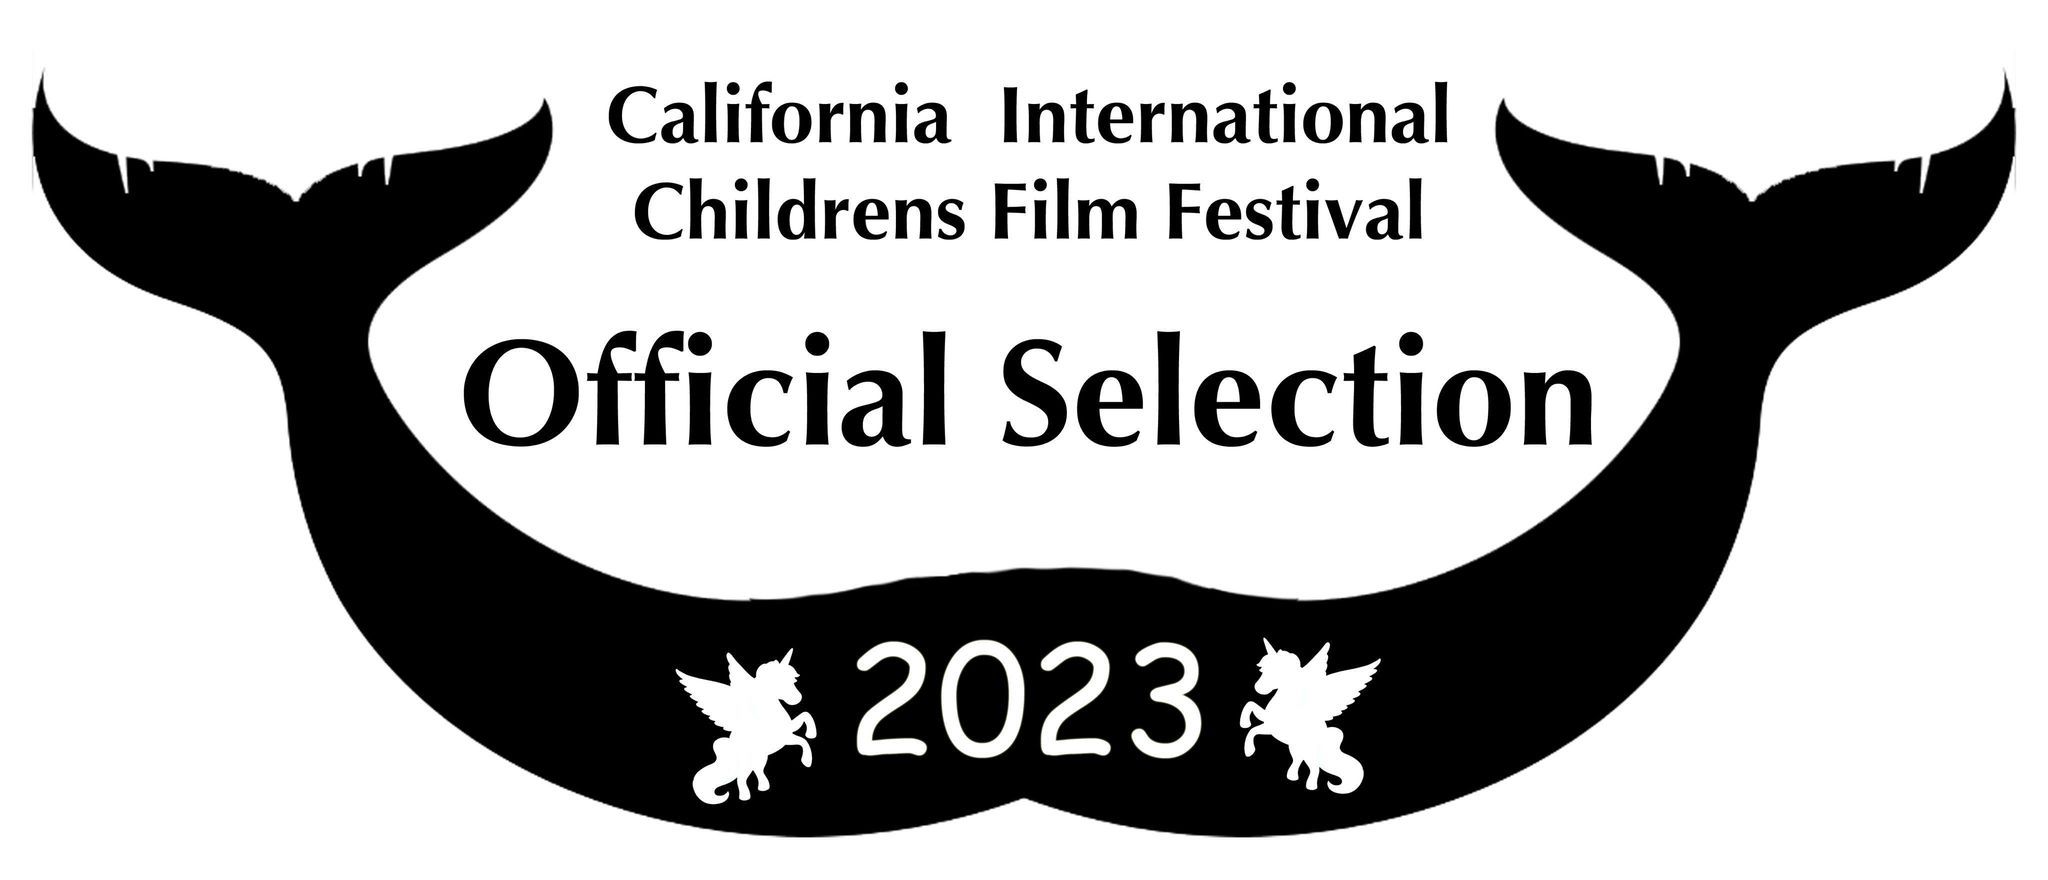 Klaudia Kovács' Award-Winning Short Film 'BROWN PAPER BAG' to Screen at California International Children's Film Festival